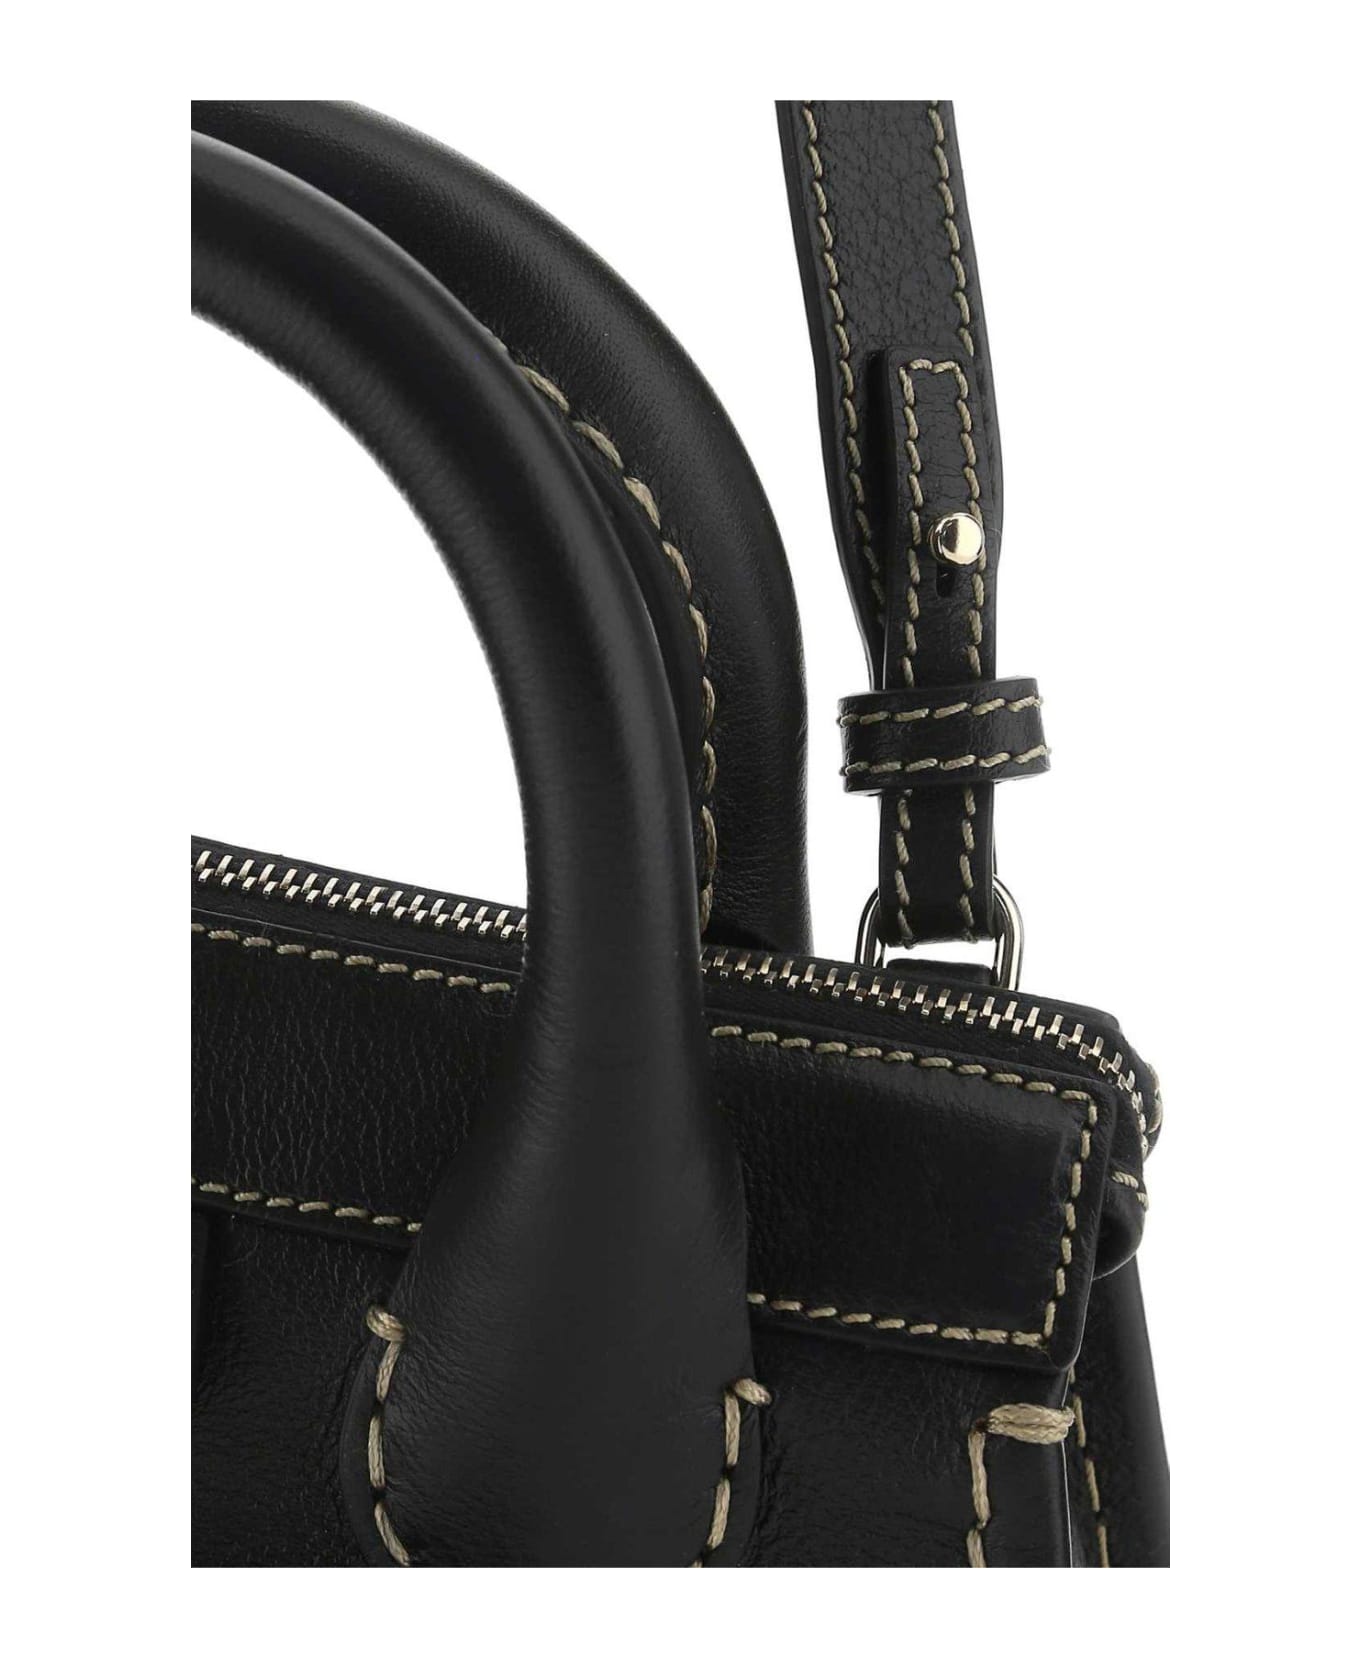 Chloé Edith Medium Top Handle Bag - Black